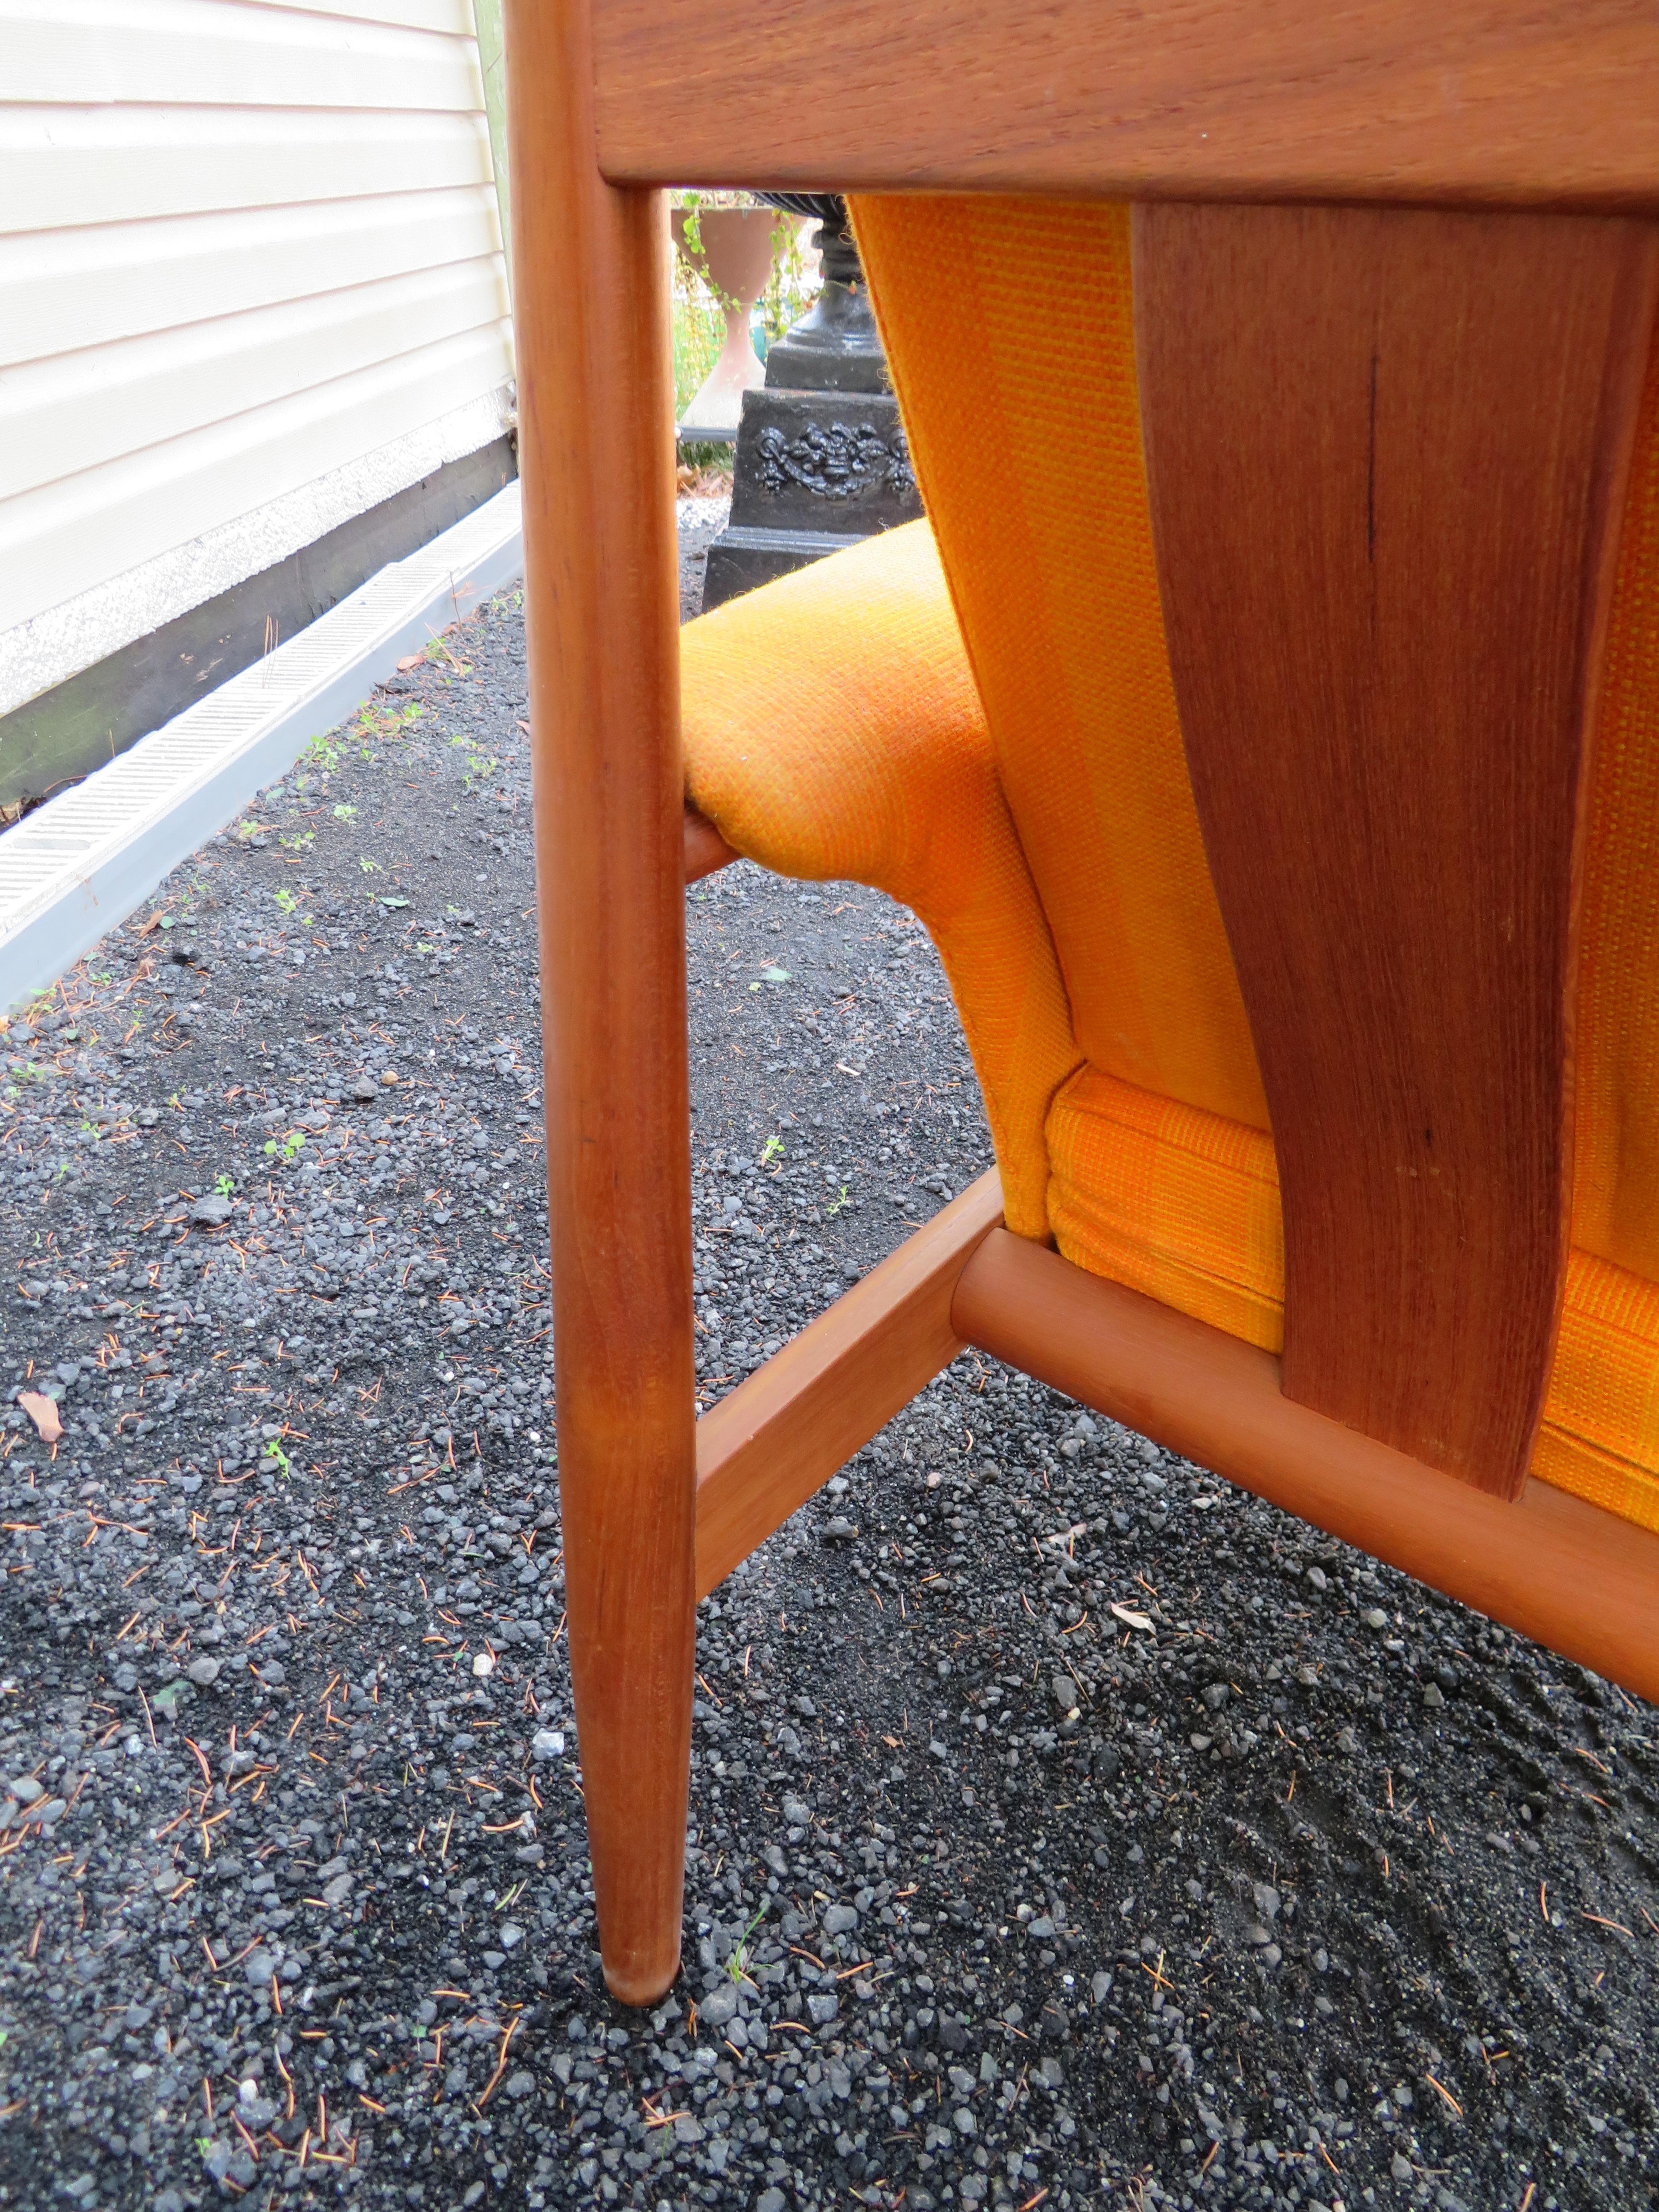 Scandinavian Modern Outstanding Grete Jalk Teak Lounge Chair, Midcentury Danish Modern For Sale